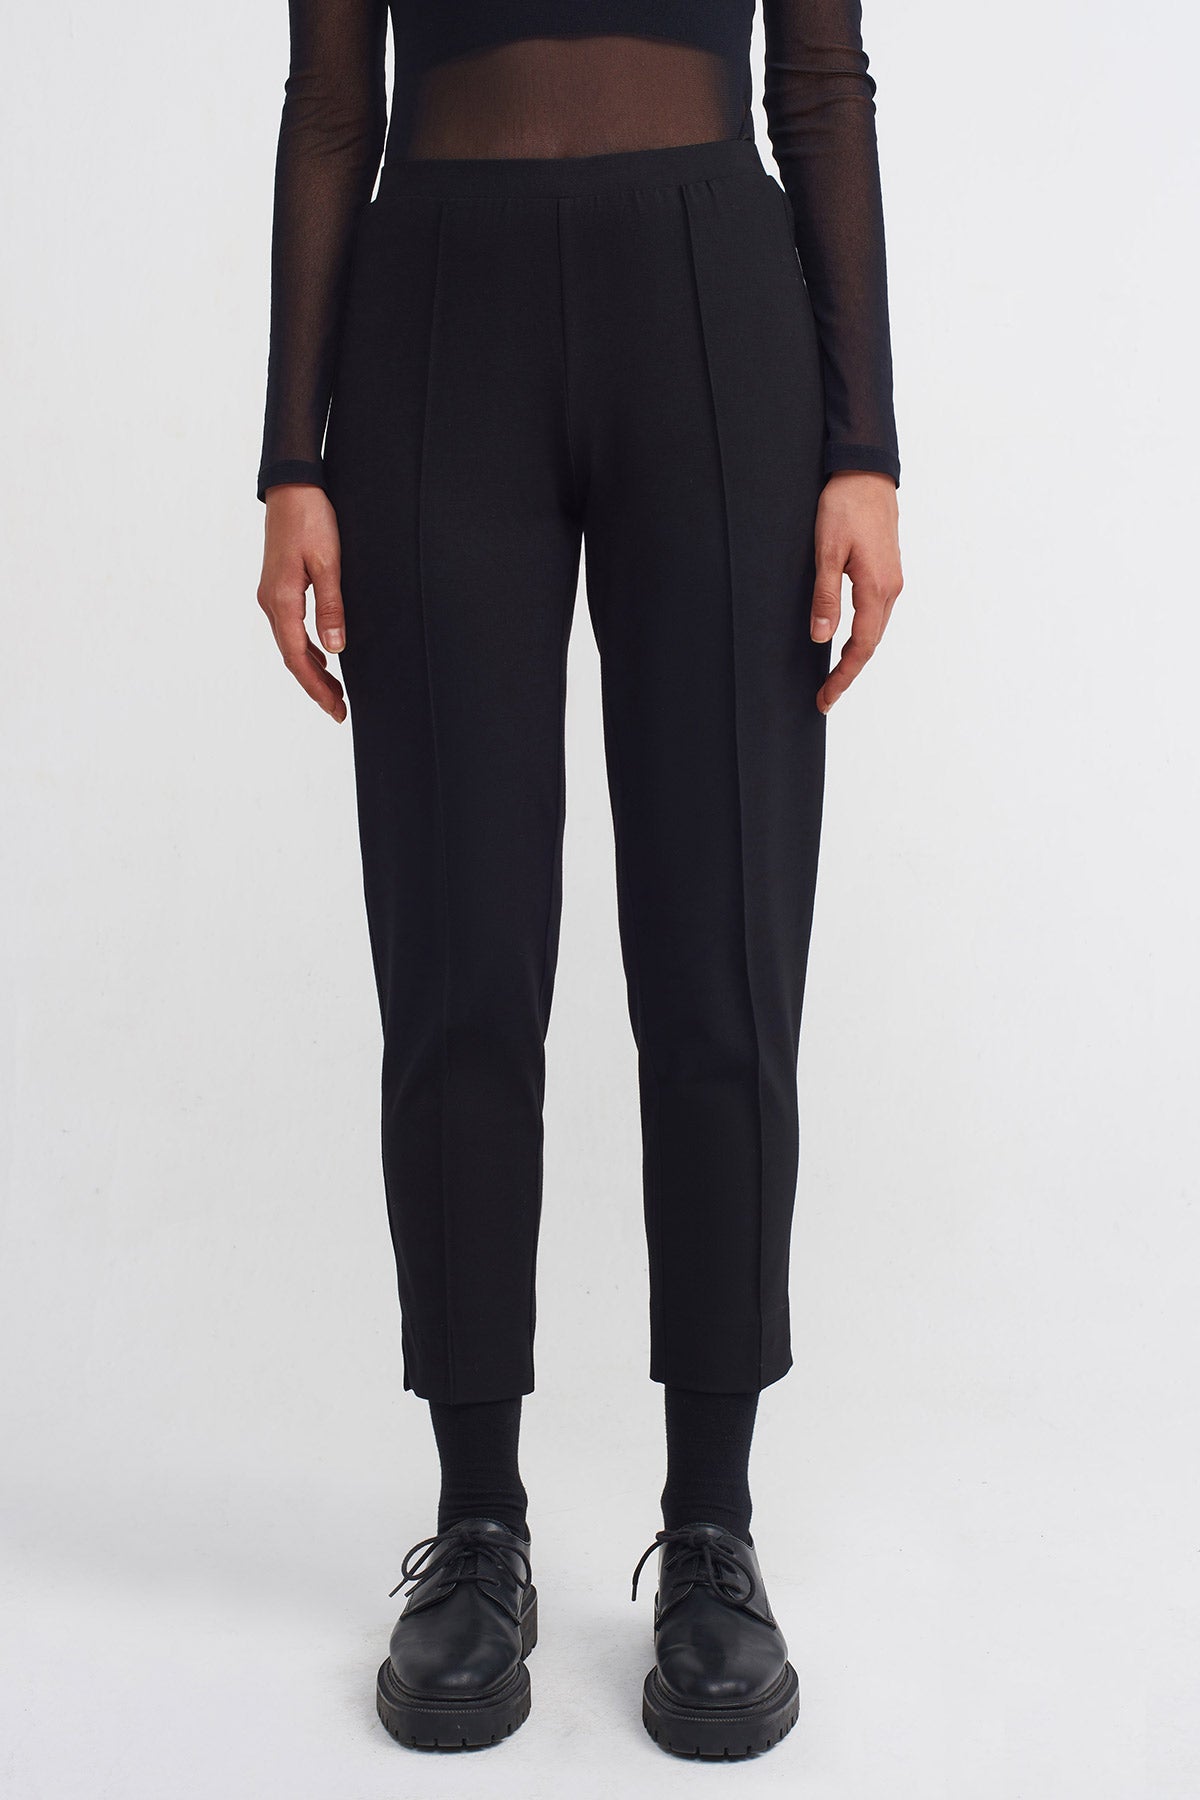 Black Pressed Seam Short Trousers-K233013057